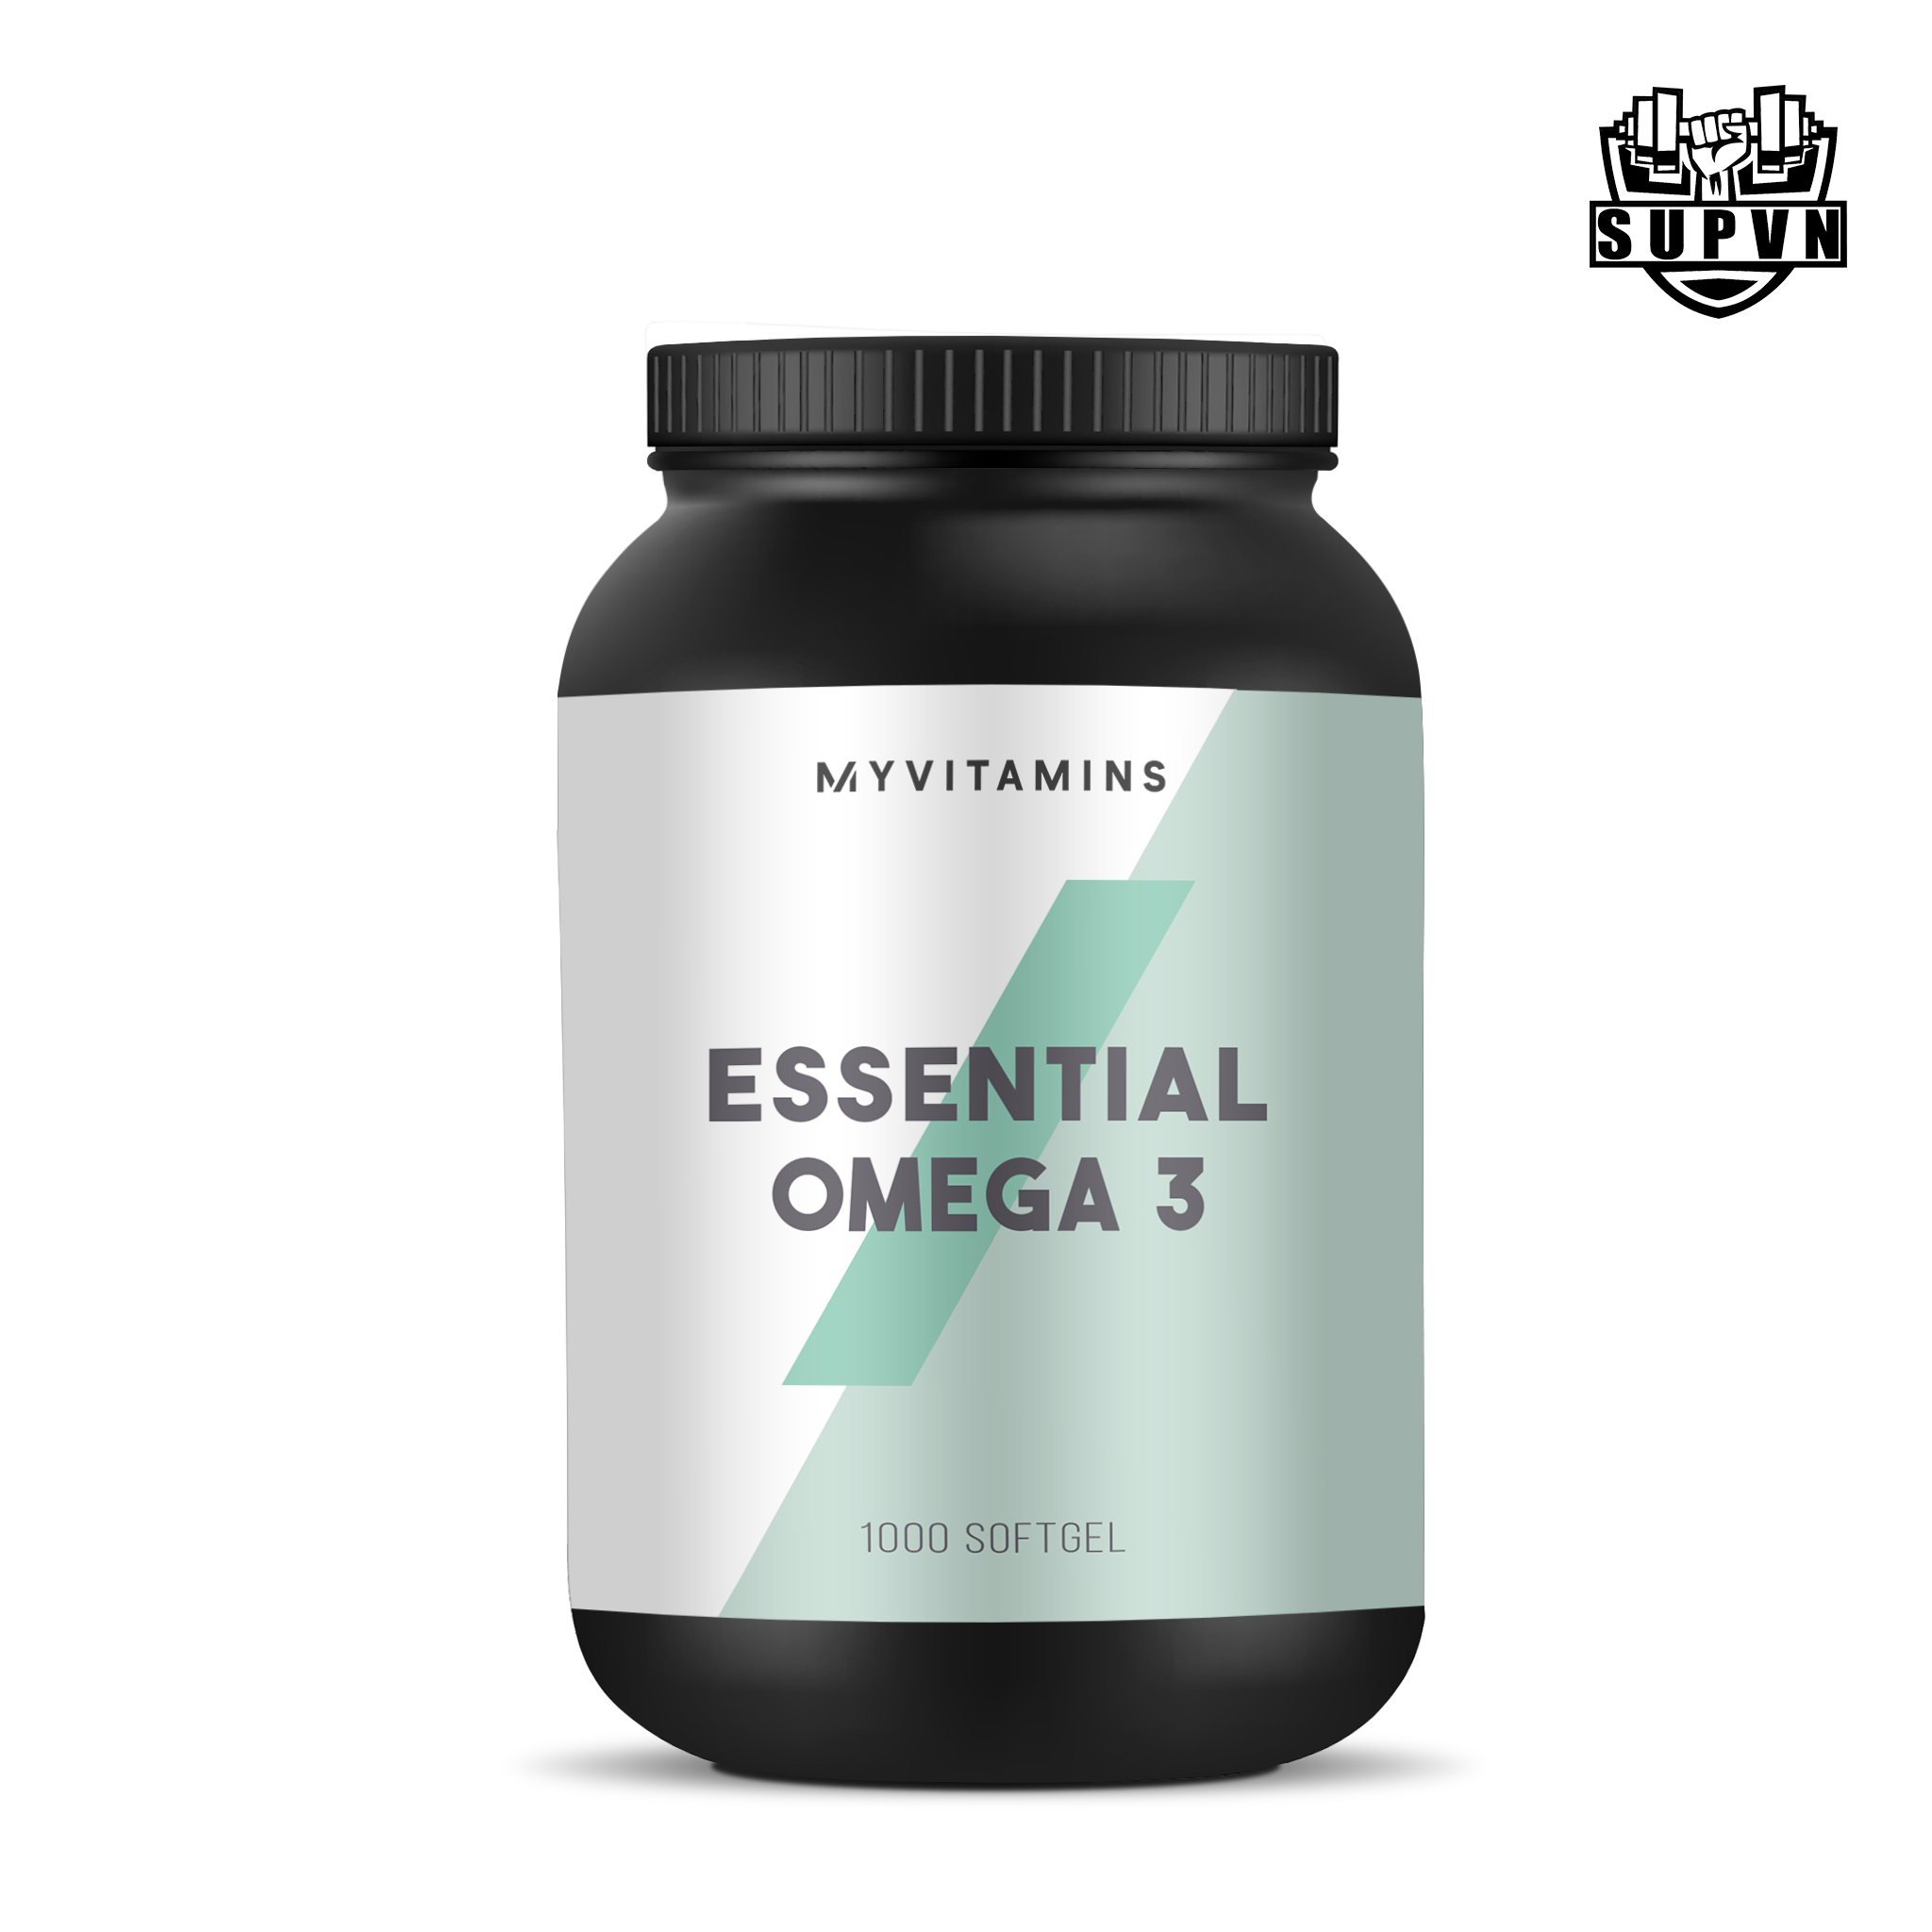 Omega 3 Myvitamins - Essential – SUPVN